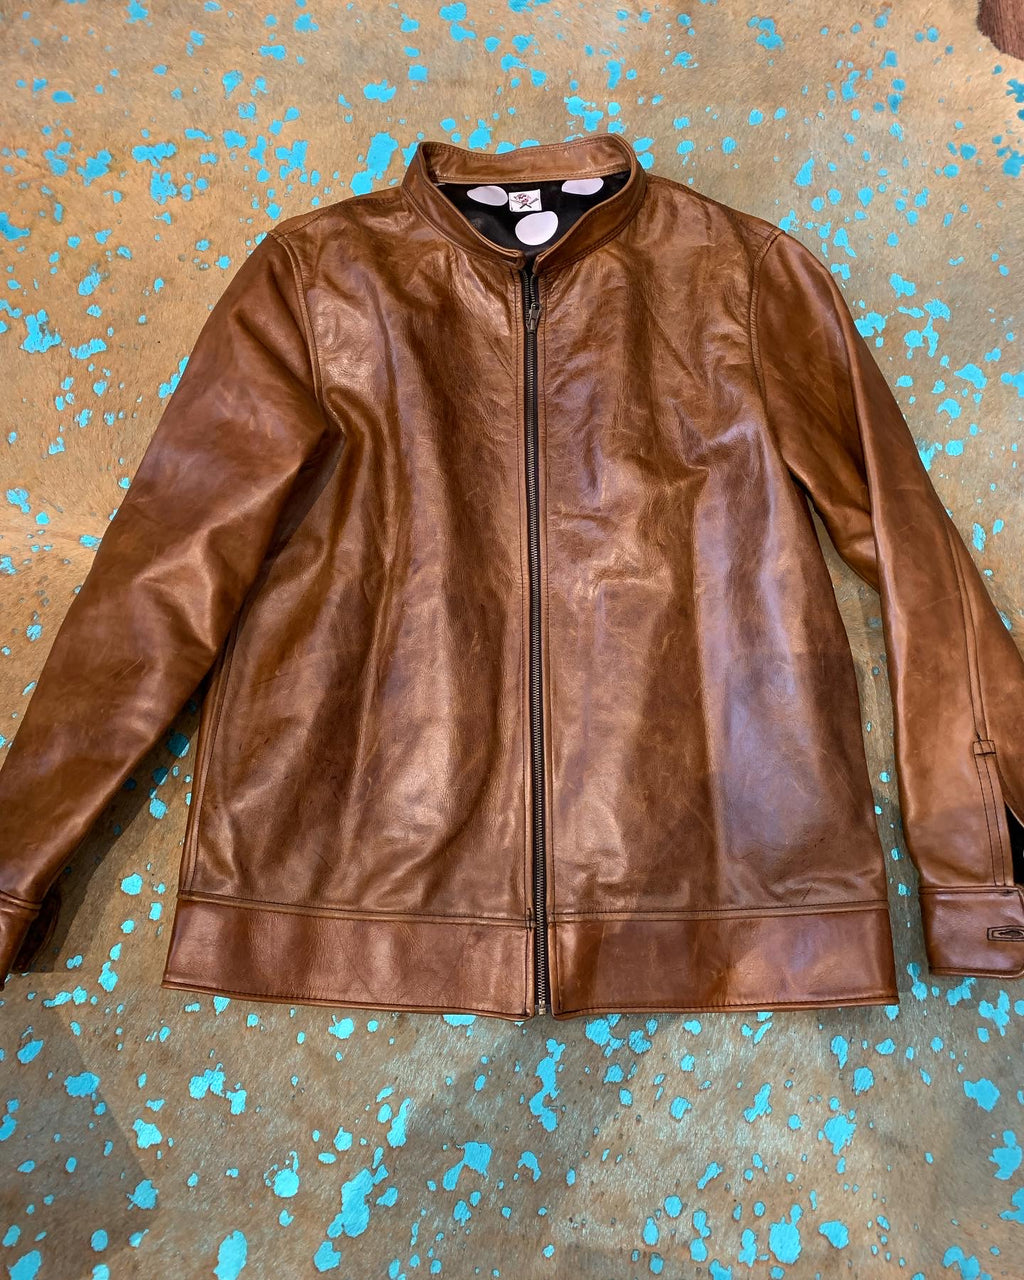 The polka dot King leather jacket